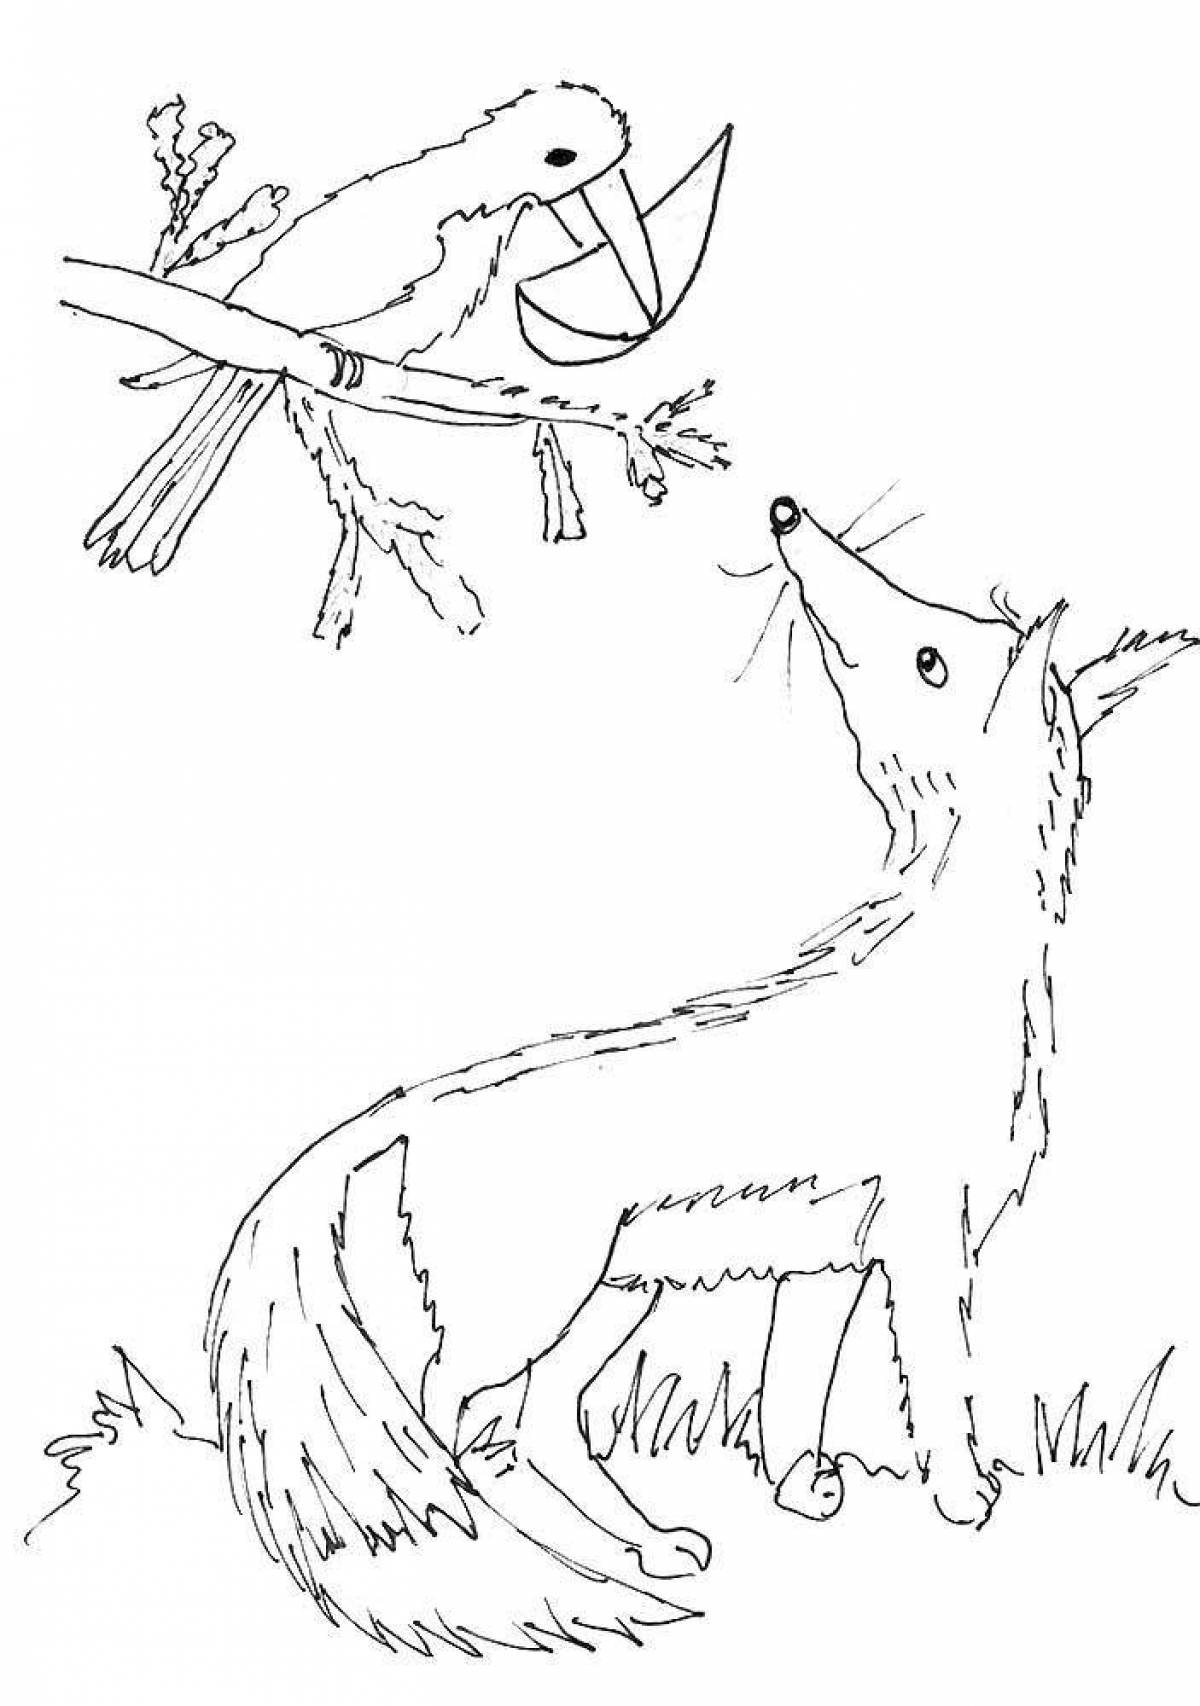 Рисунок из басни Крылова ворона и лисица